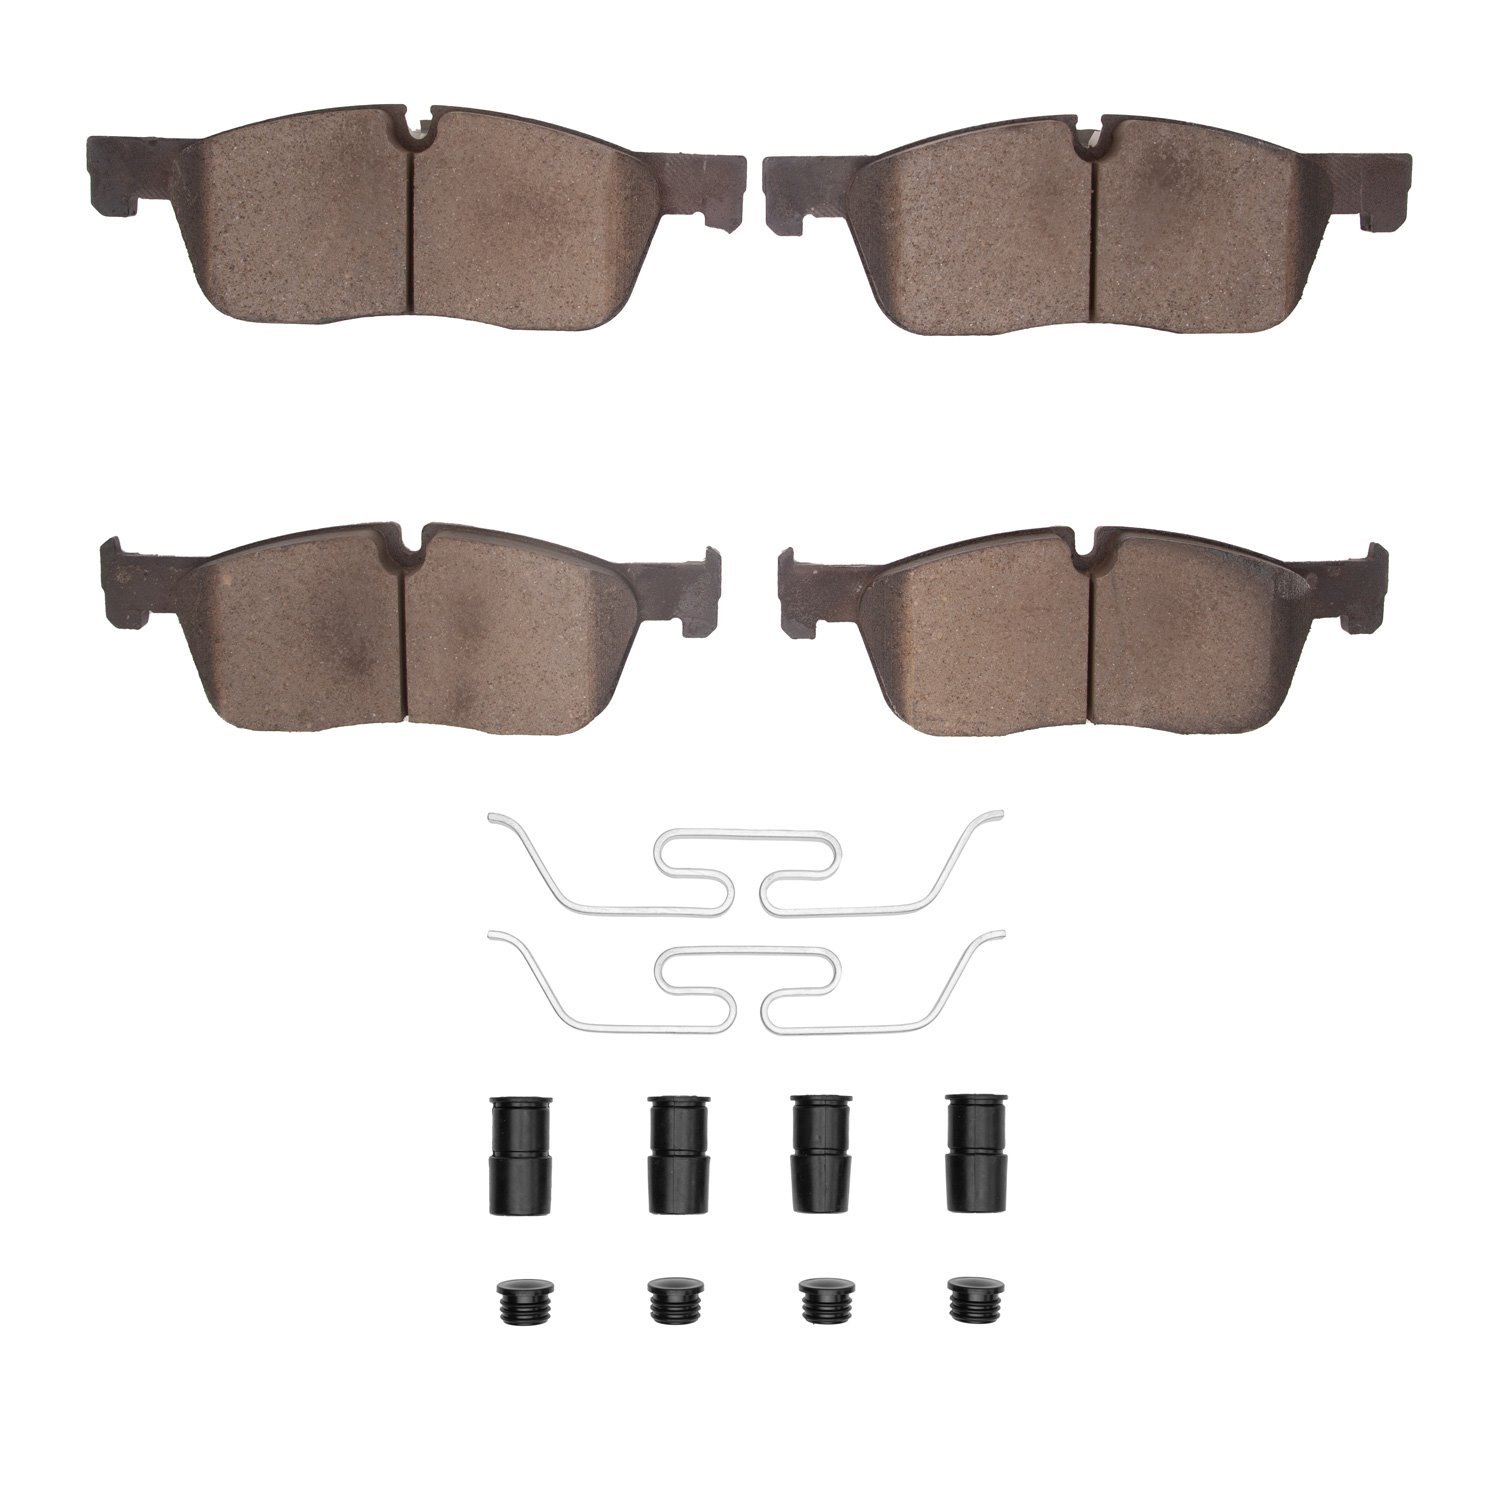 Euro Ceramic Brake Pads & Hardware Kit, 2015-2019 Fits Multiple Makes/Models, Position: Front